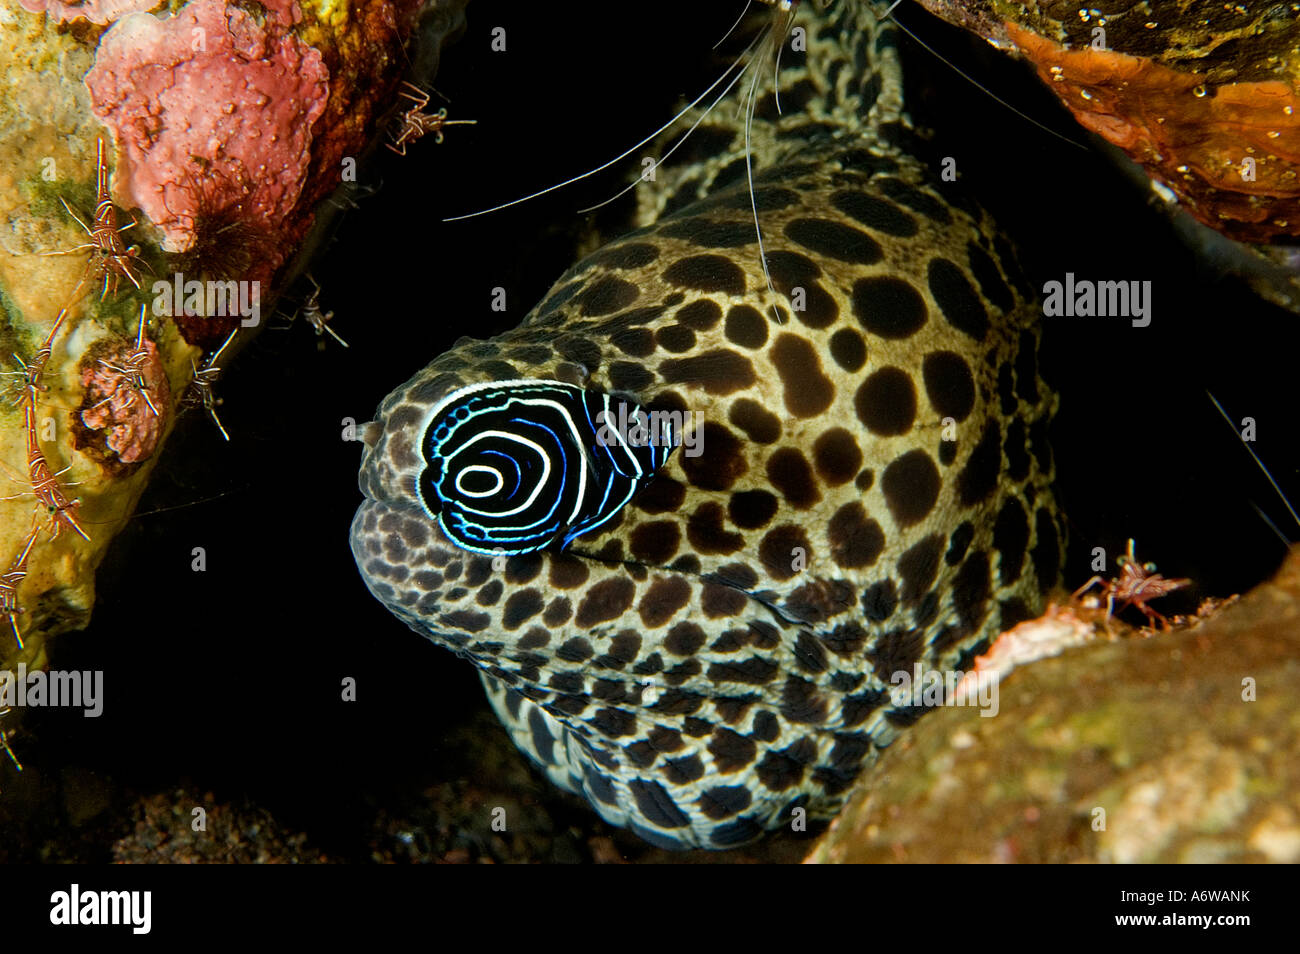 Honeycomb moray eel, Gymnothorax favagineus, and unusual behavior of juvenile emperor angelfish, Pomacanthus imperator, Bali. Stock Photo